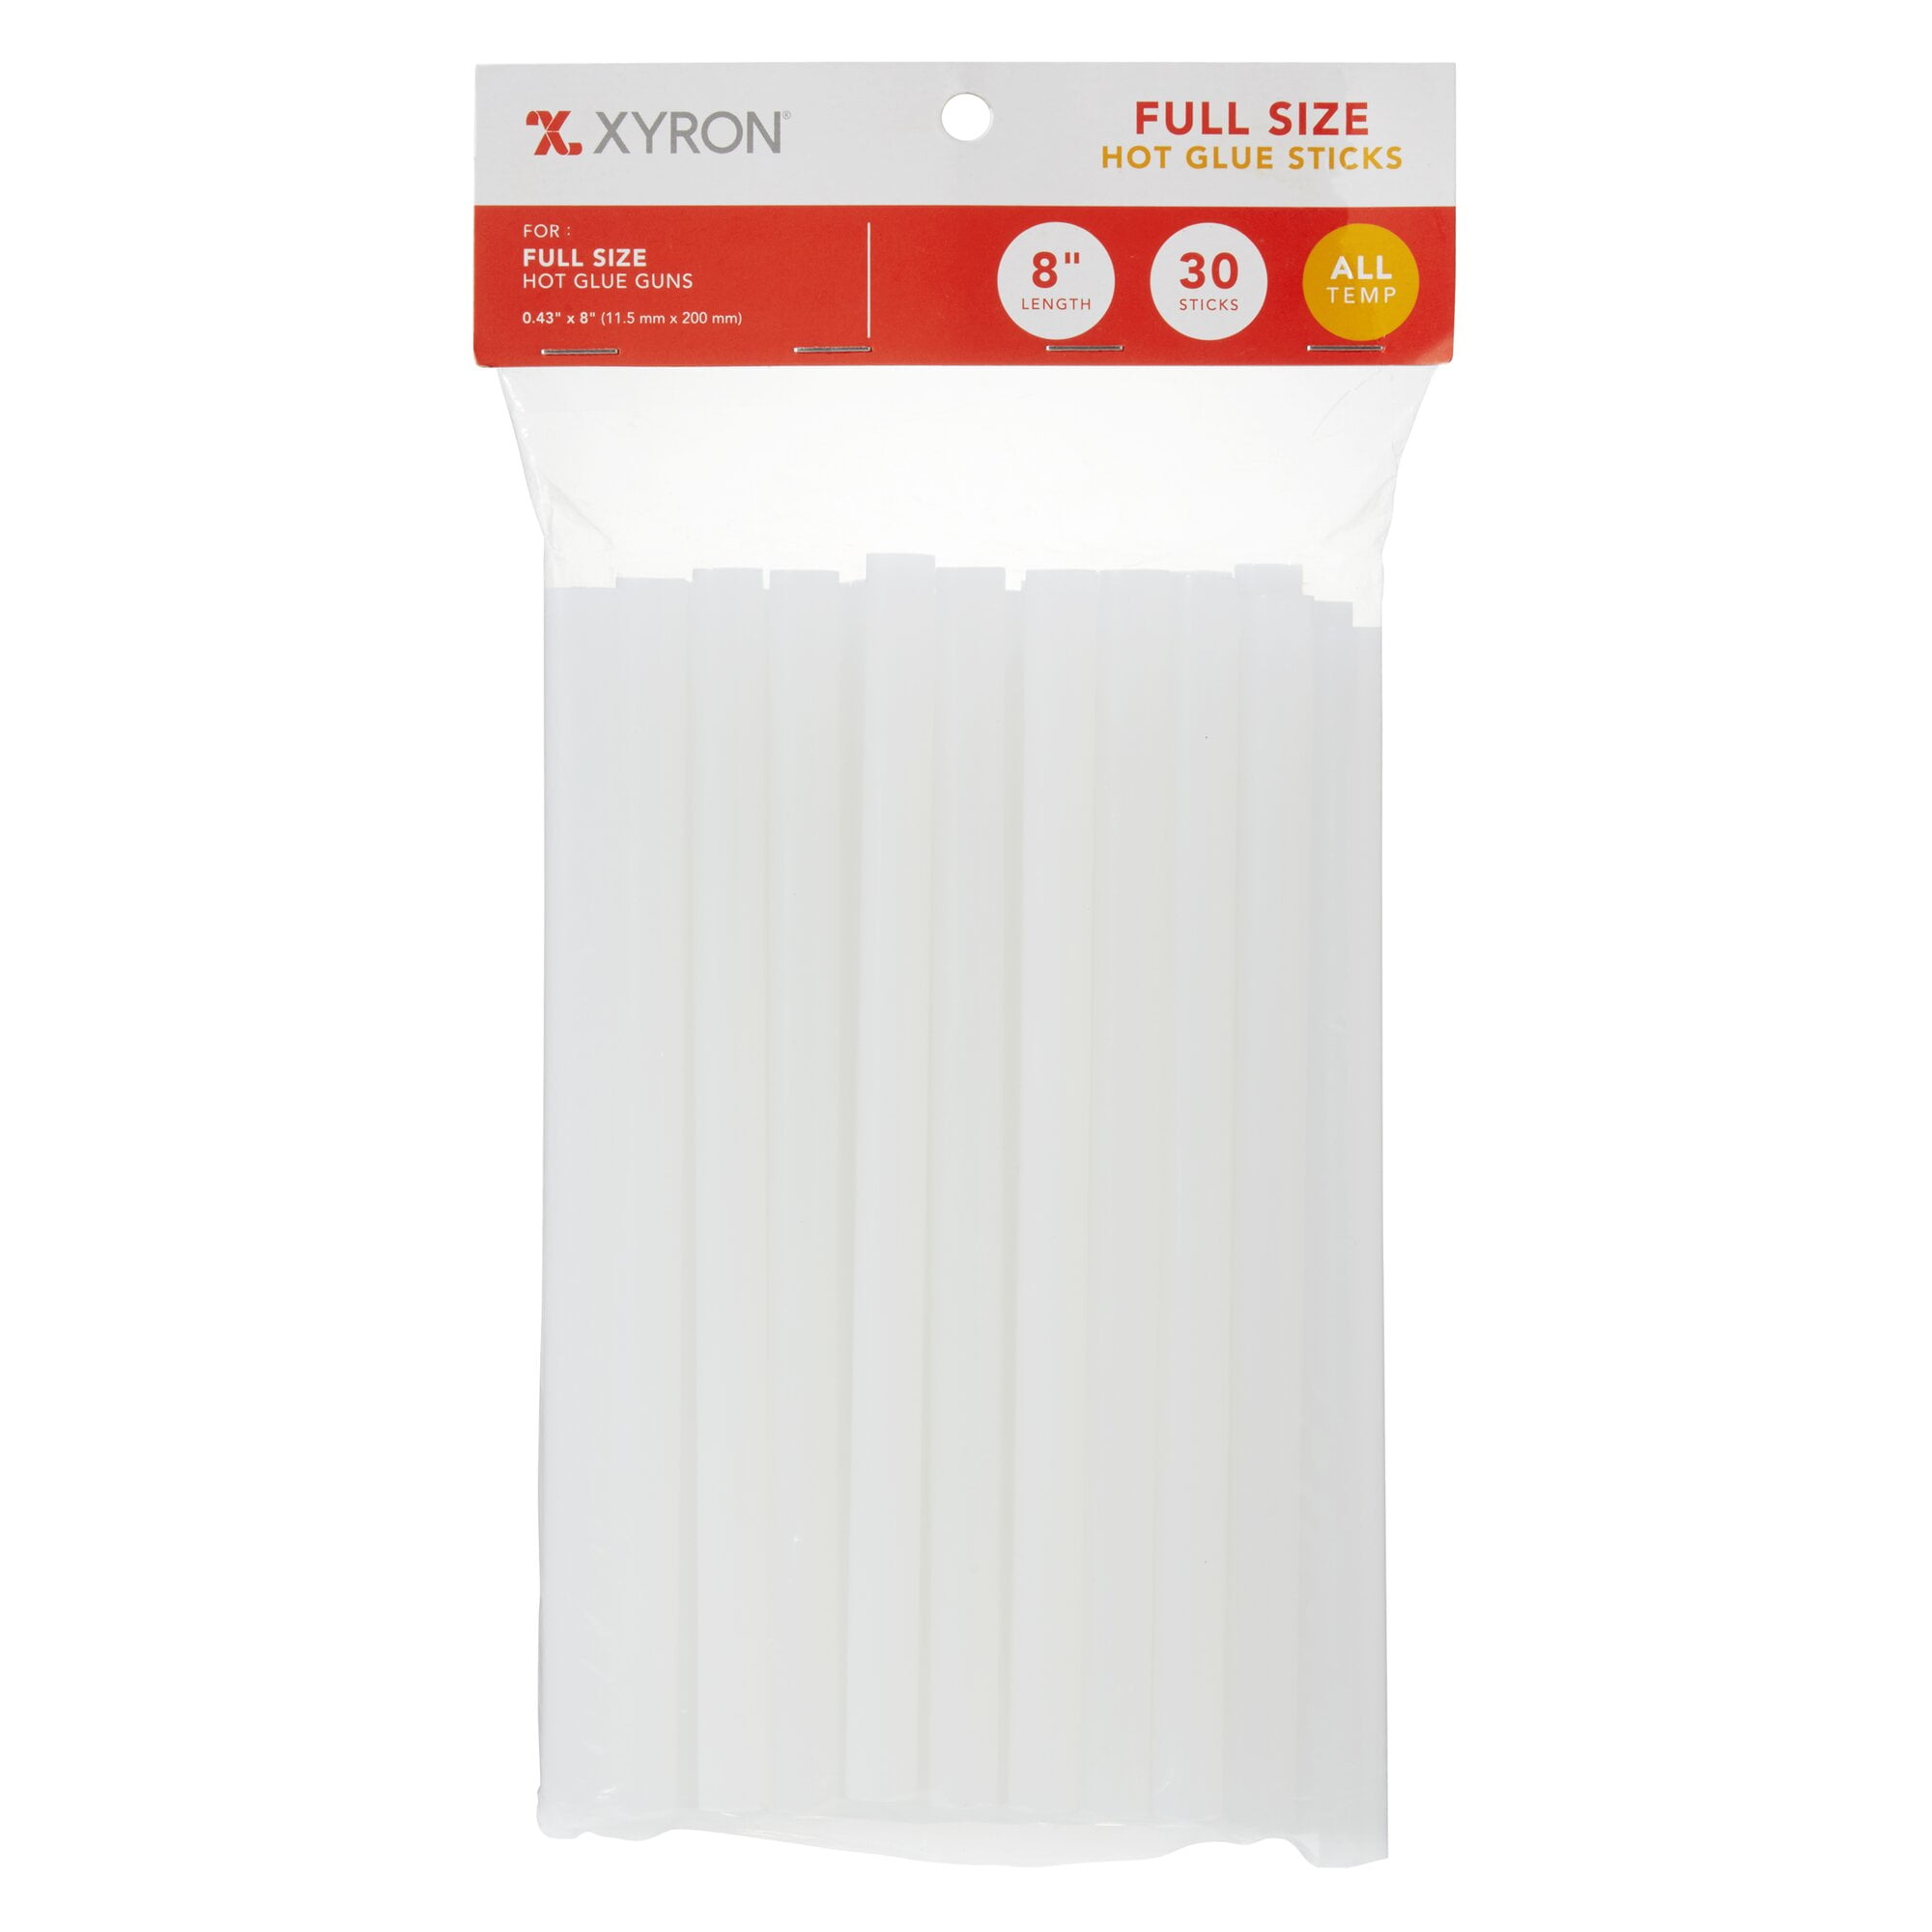 Xyron Full Size Hot Glue Sticks, 8, 30 Pack, Hot Glue Guns